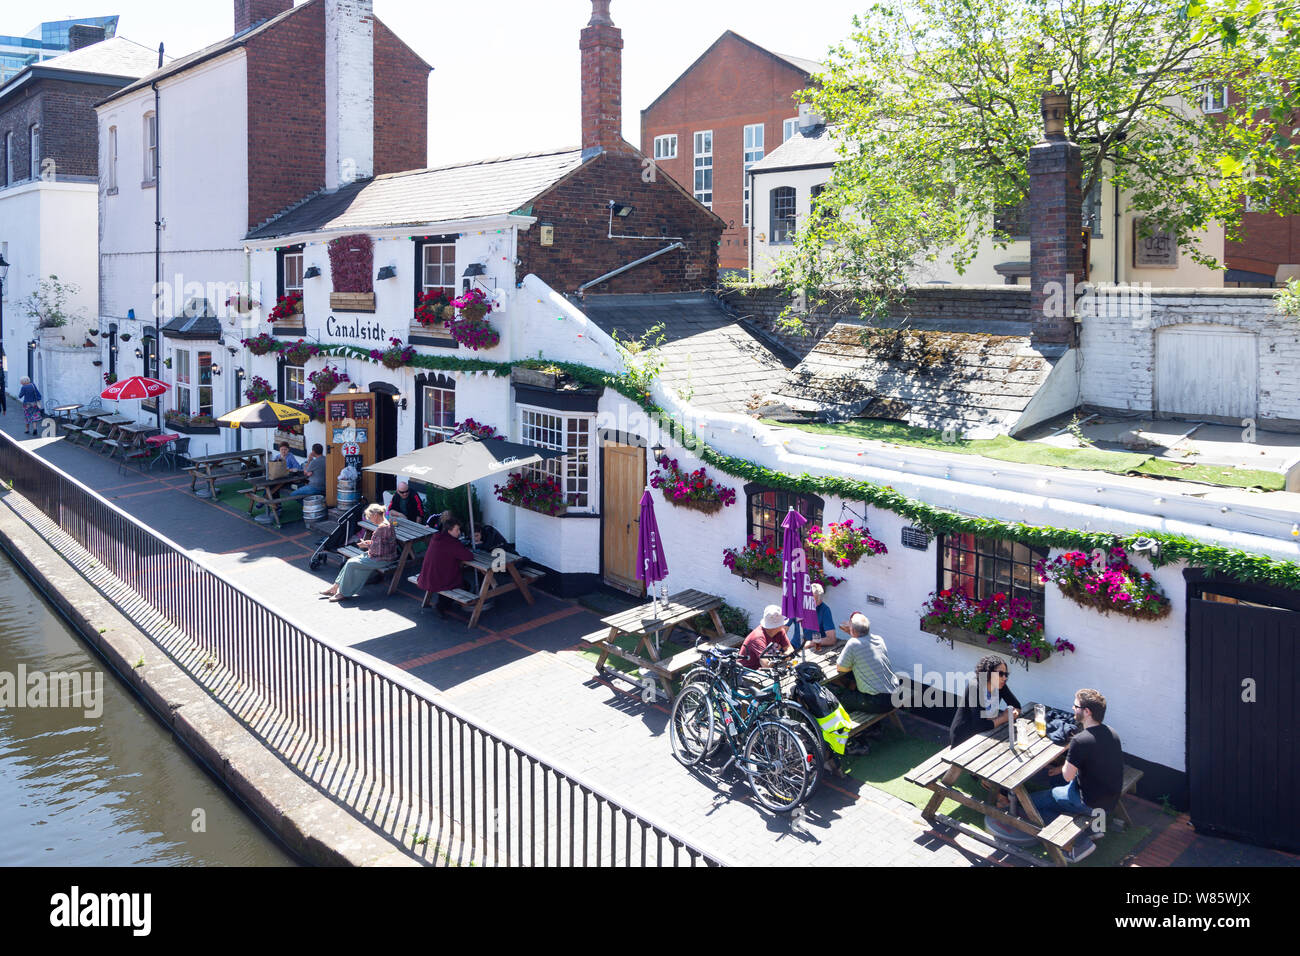 Canalside Cafe, The Worcester and Birmingham Canal, Gas Street Basin, Birmingham, West Midlands, England, United Kingdom Stock Photo